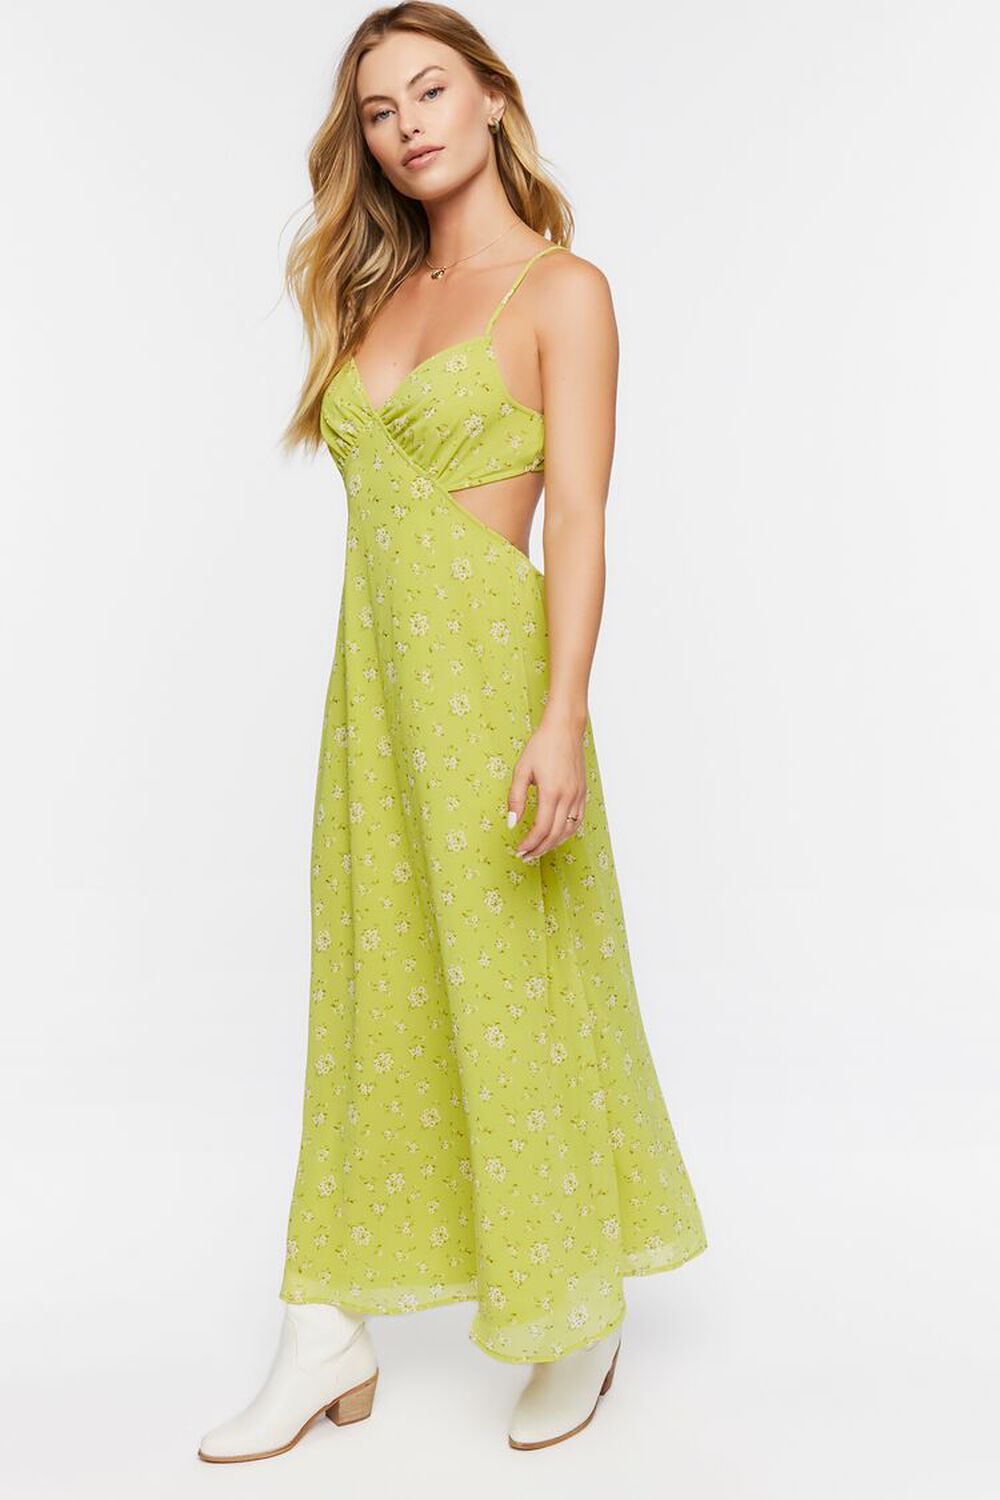 GREEN/MULTI Chiffon Ditsy Floral Print Maxi Dress, image 1